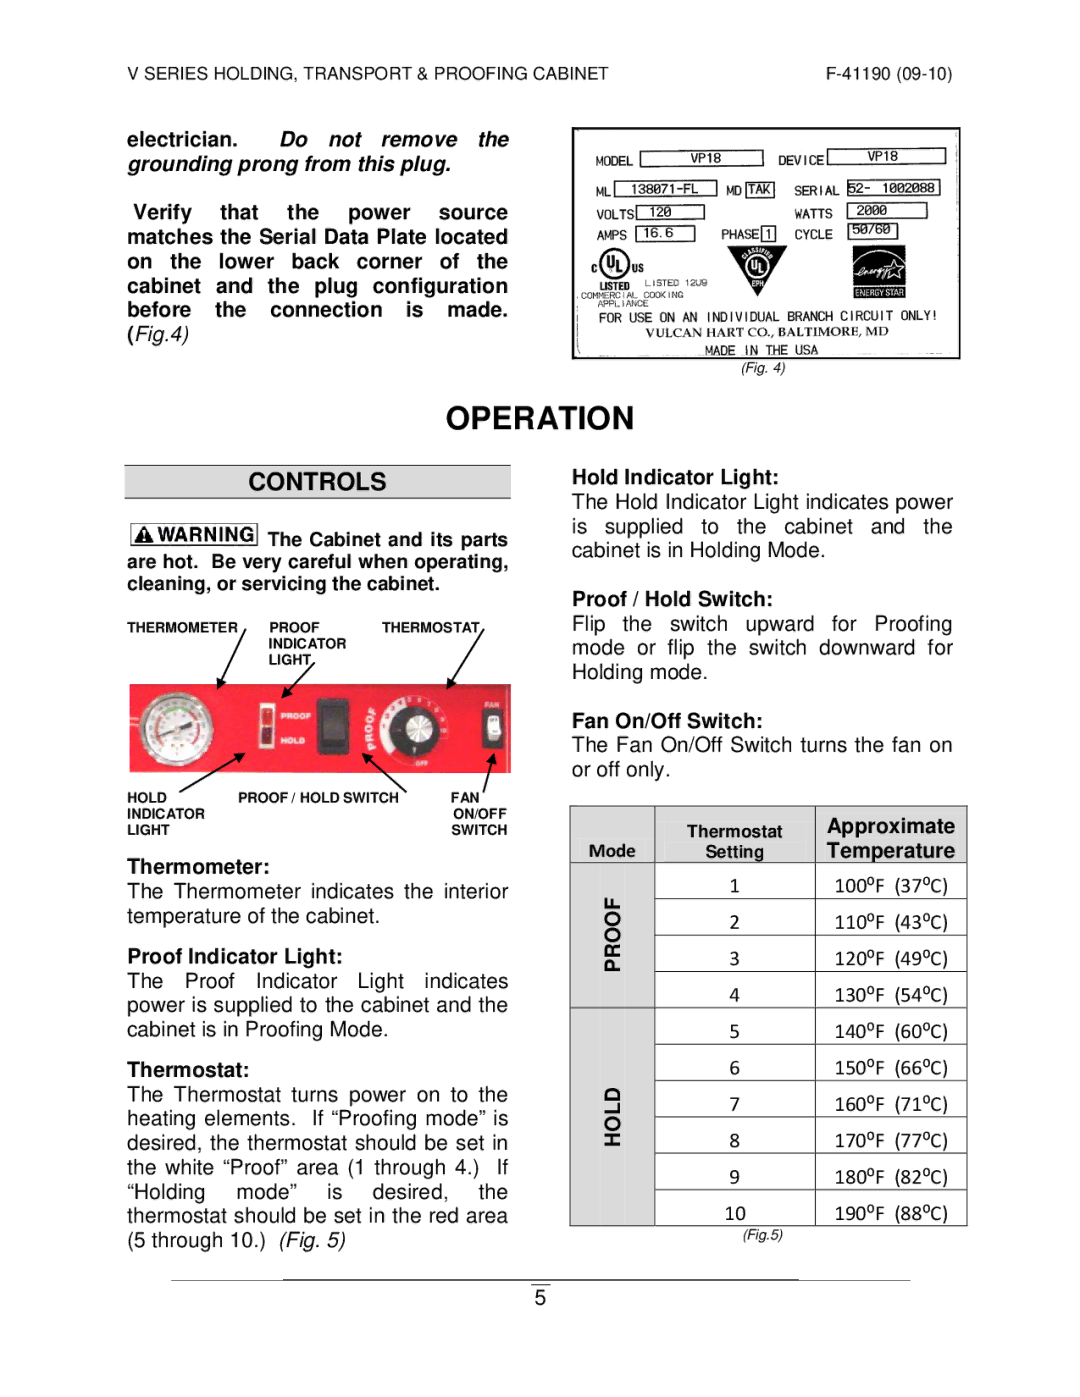 Vulcan-Hart VP18 ML-138089 operation manual Operation, Controls, Hold 